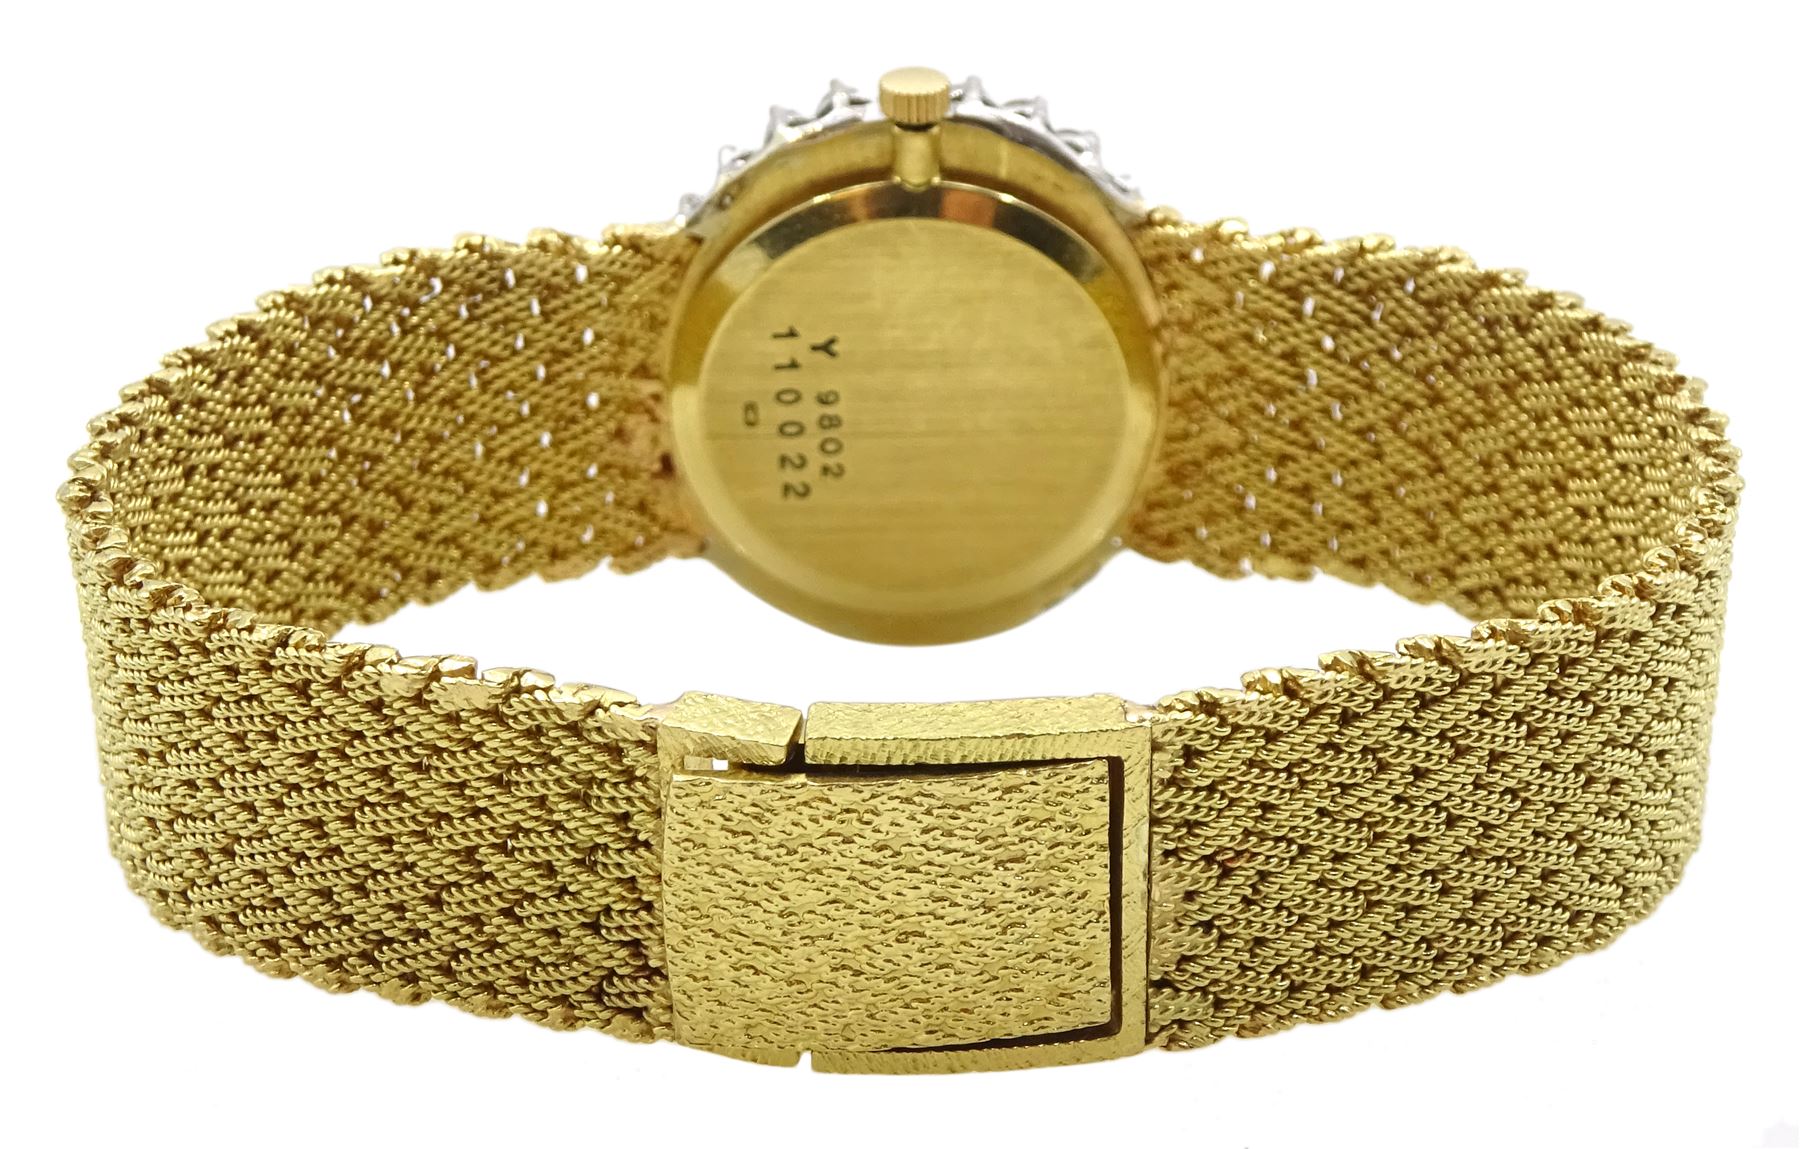 Bueche Girod ladies 18ct gold manual wind wristwatch - Image 3 of 4